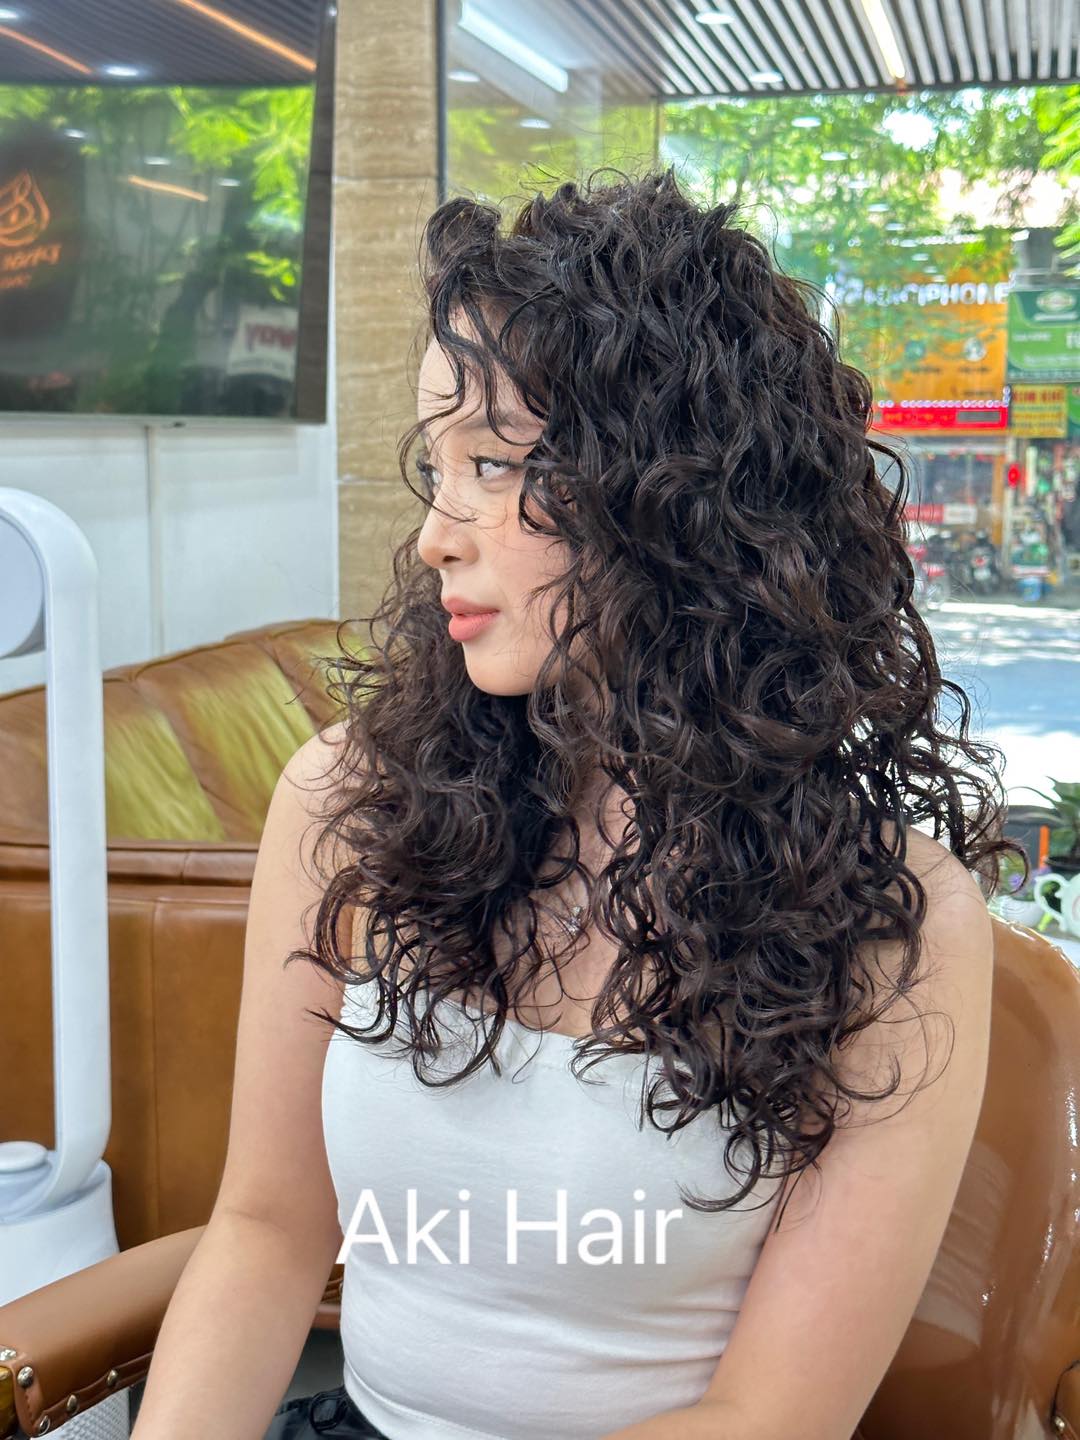 Aki Hairdressing Salon ảnh 2